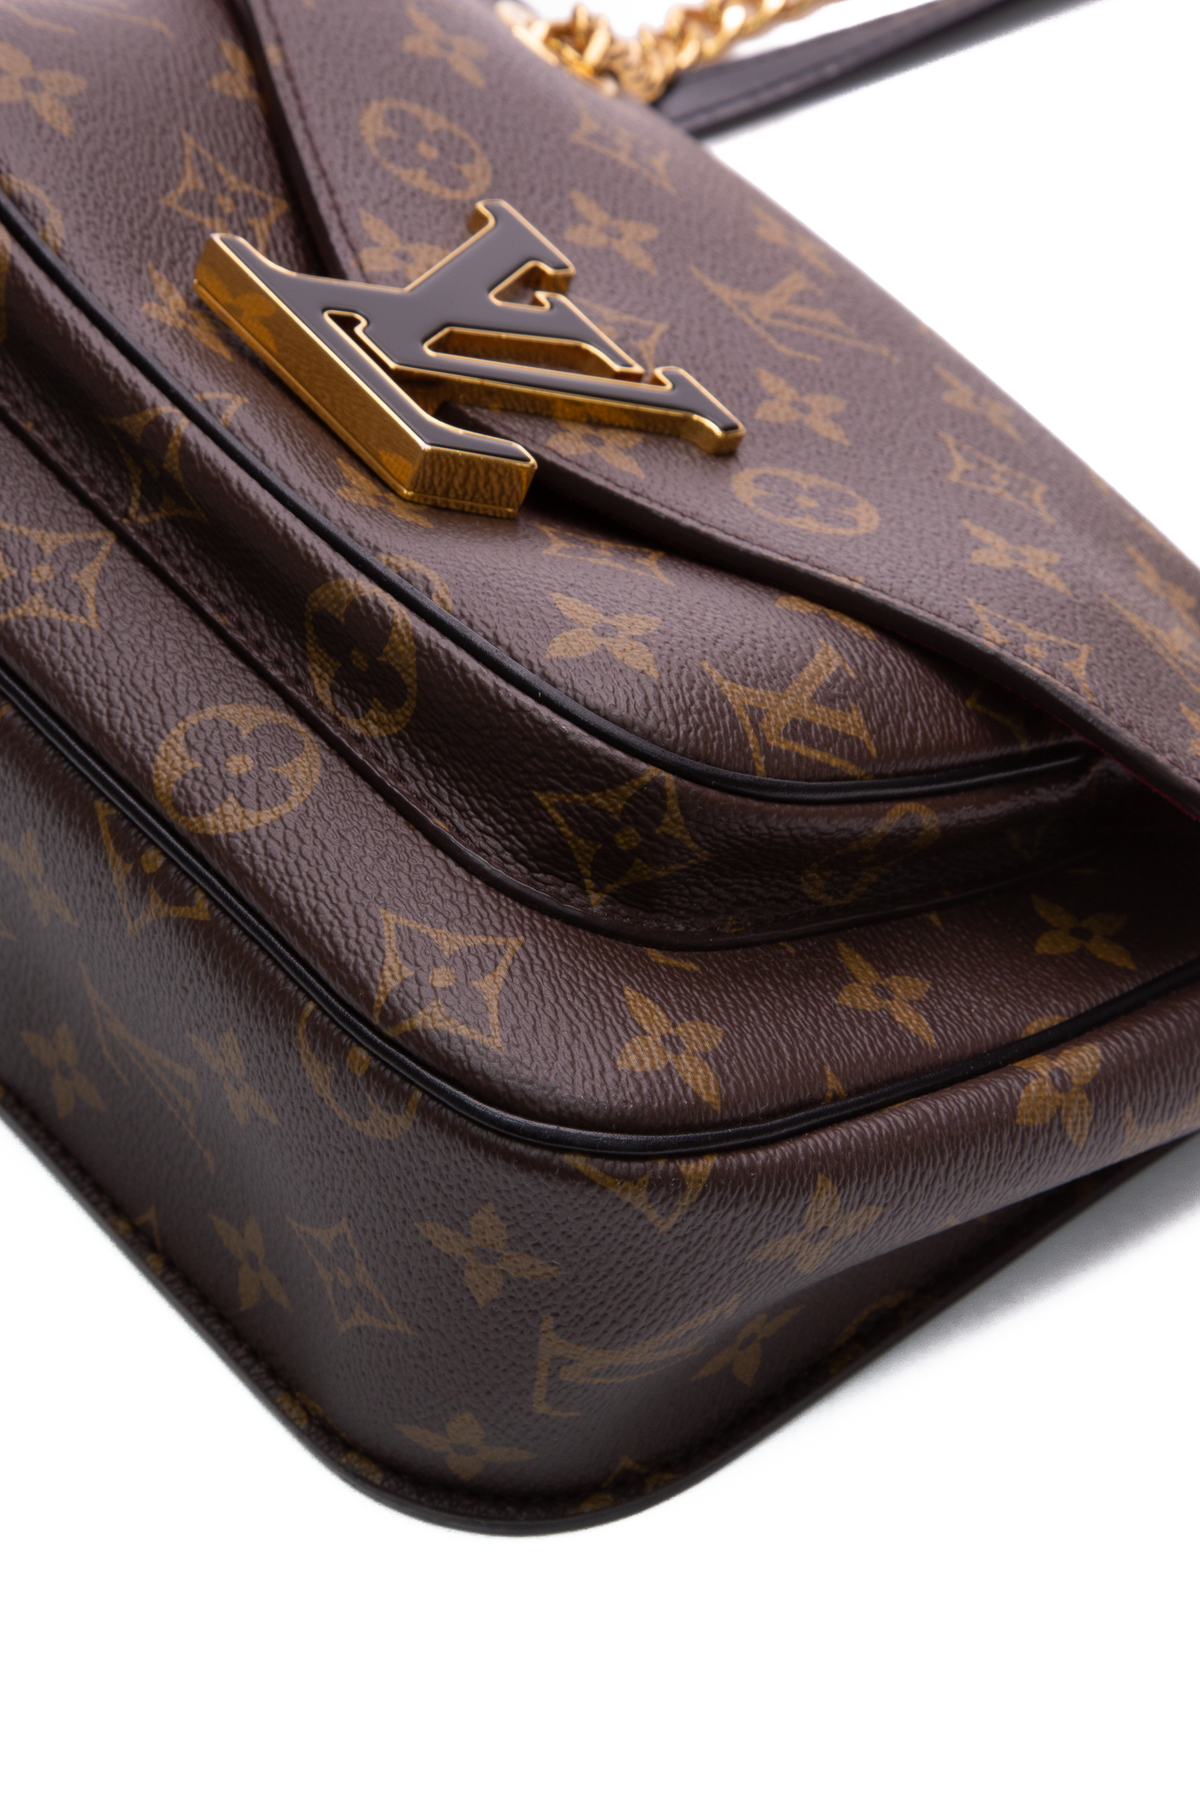 Louis Vuitton Passy Chain Bag - Couture USA